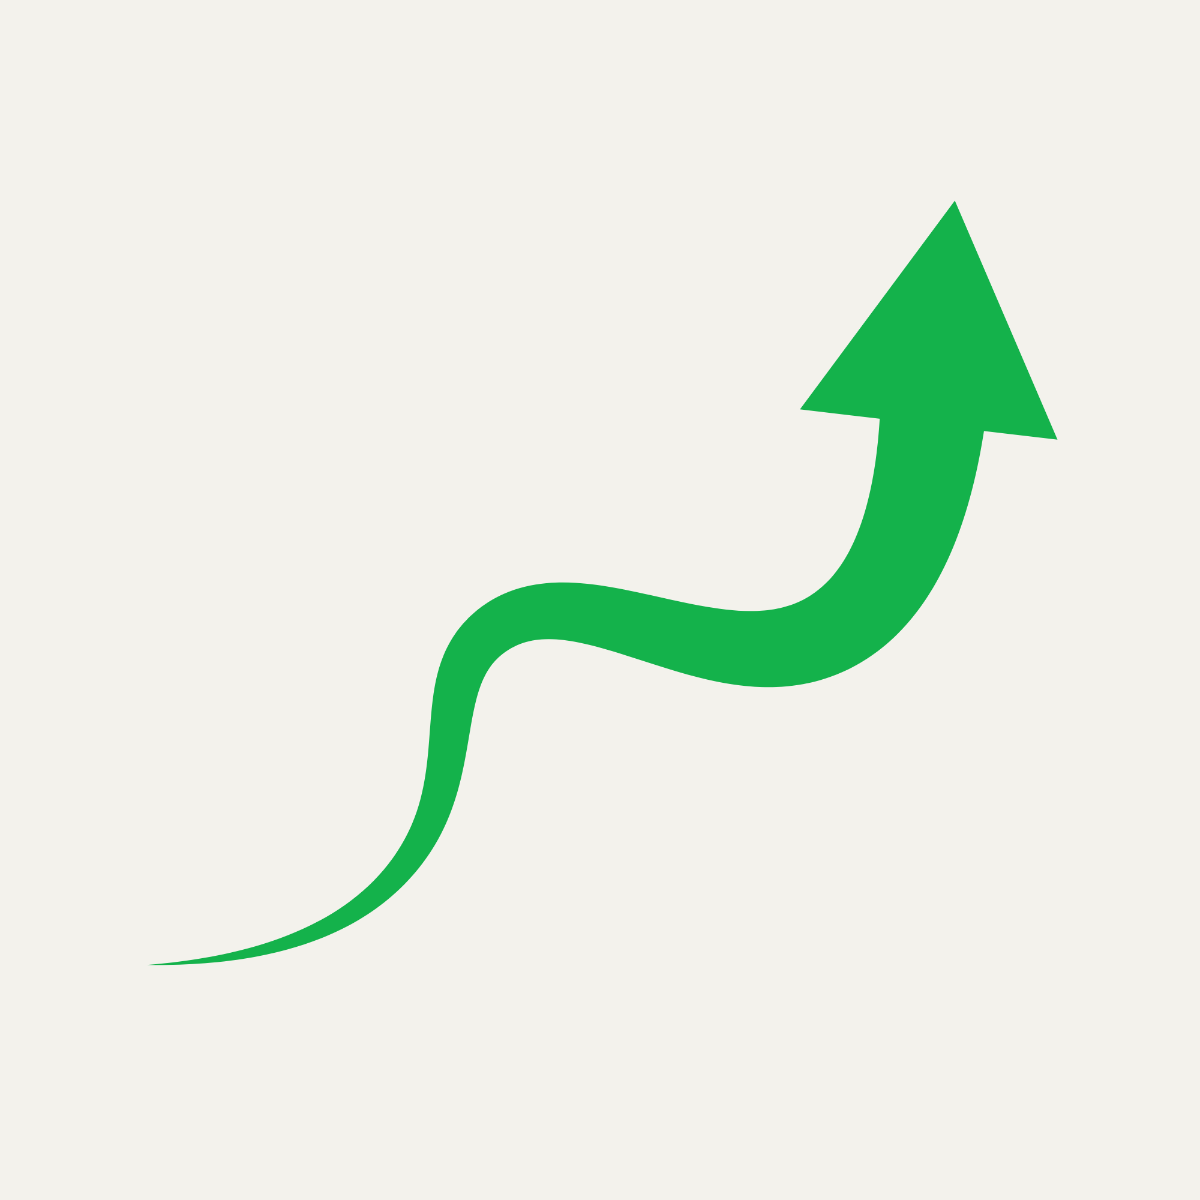 Green Curved Arrow Vector